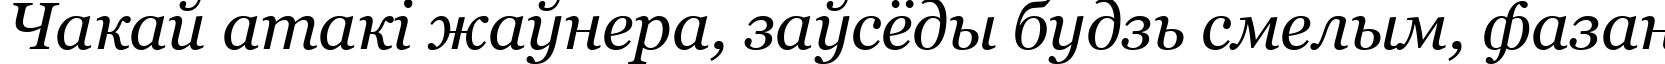 Пример написания шрифтом Georgia Italic текста на белорусском